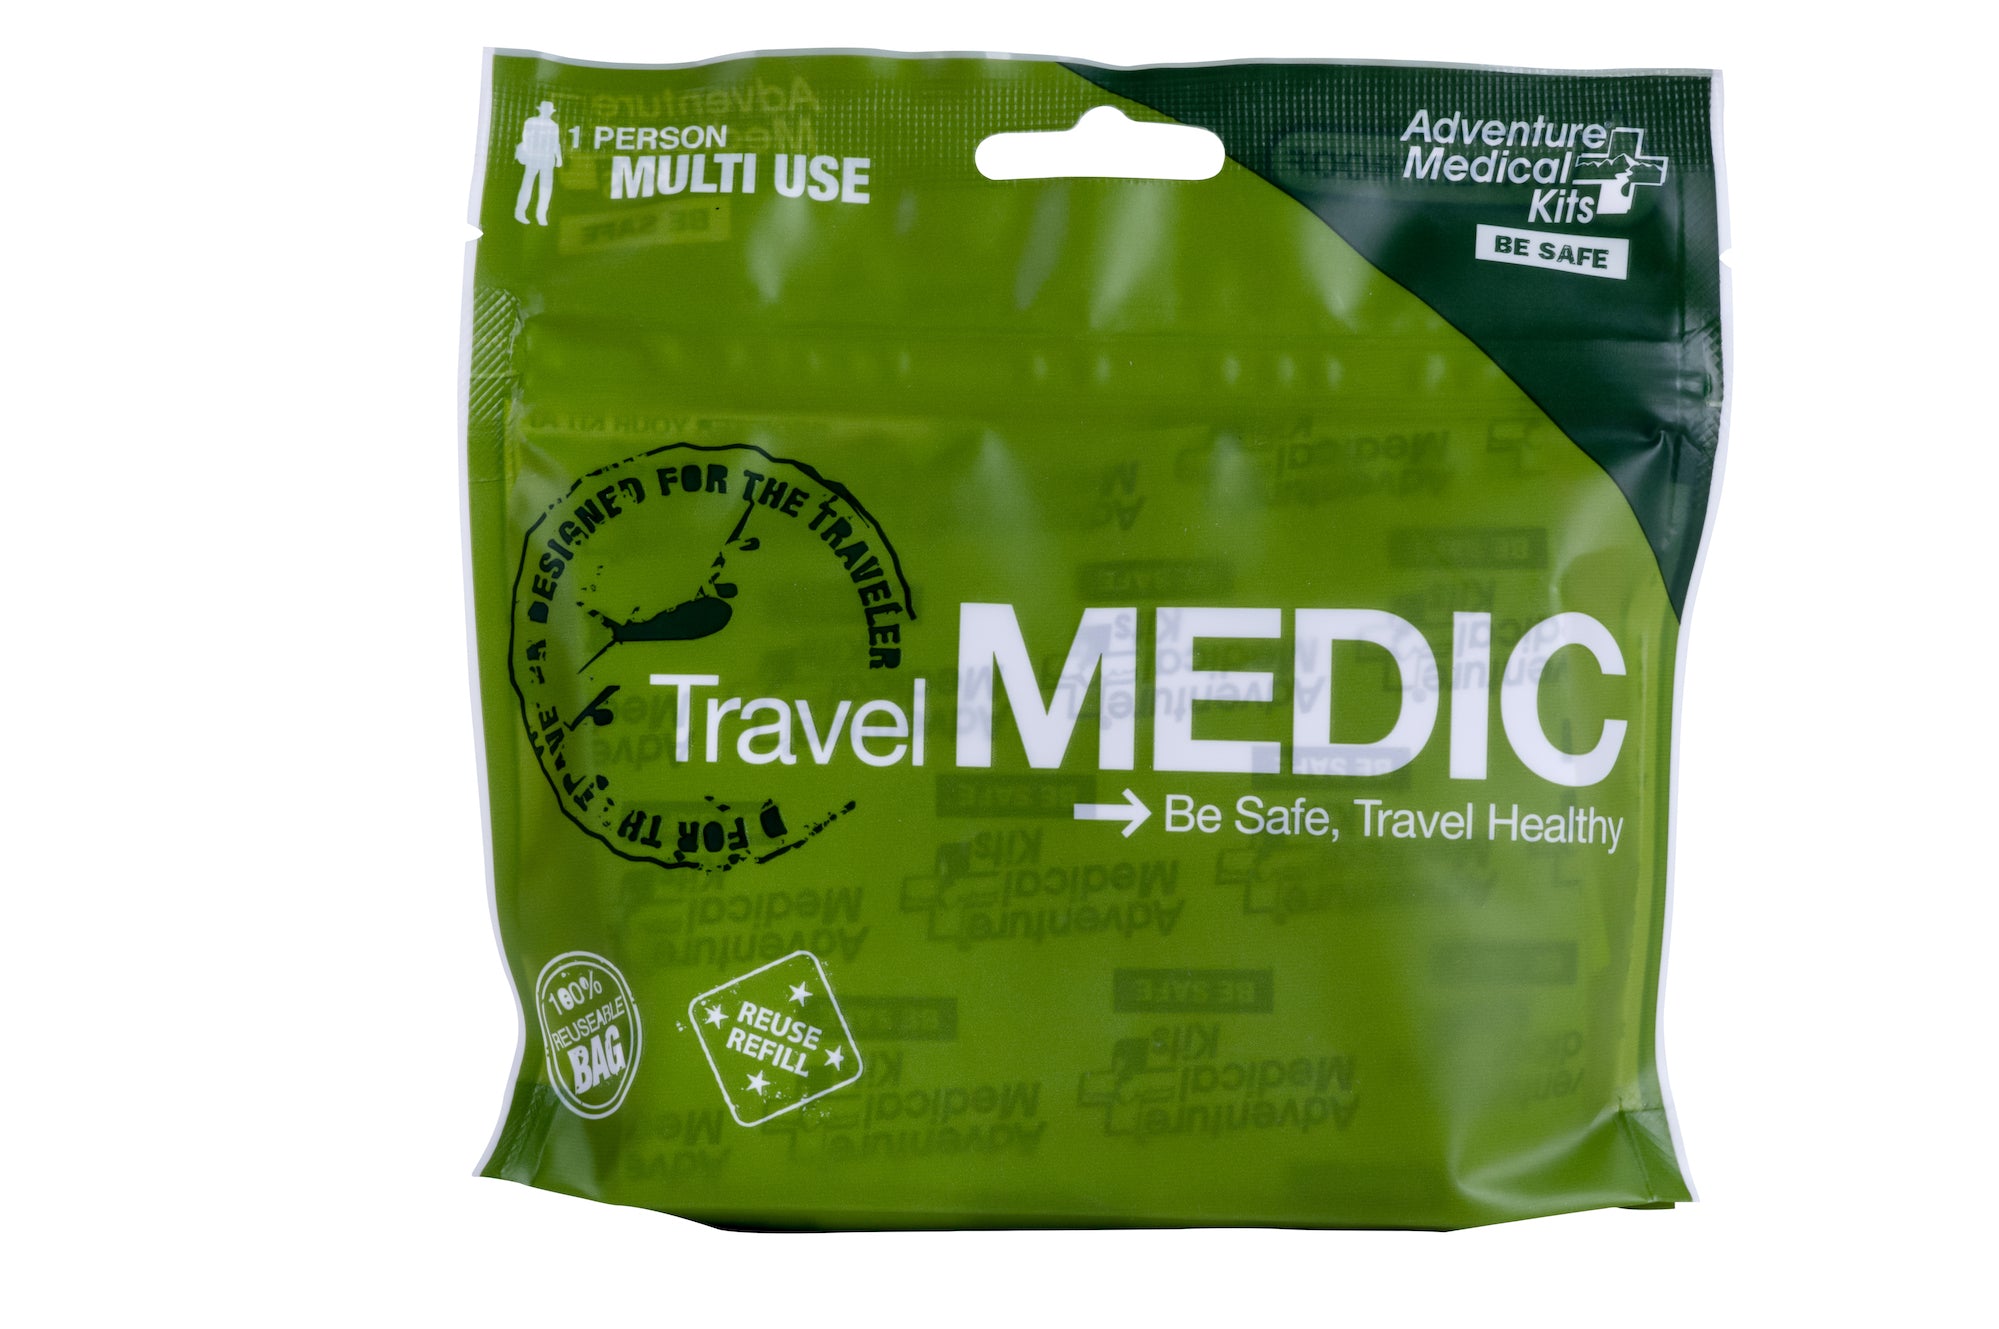 TRAVEL Series Medical Kit - Smart Travel – Focus Health